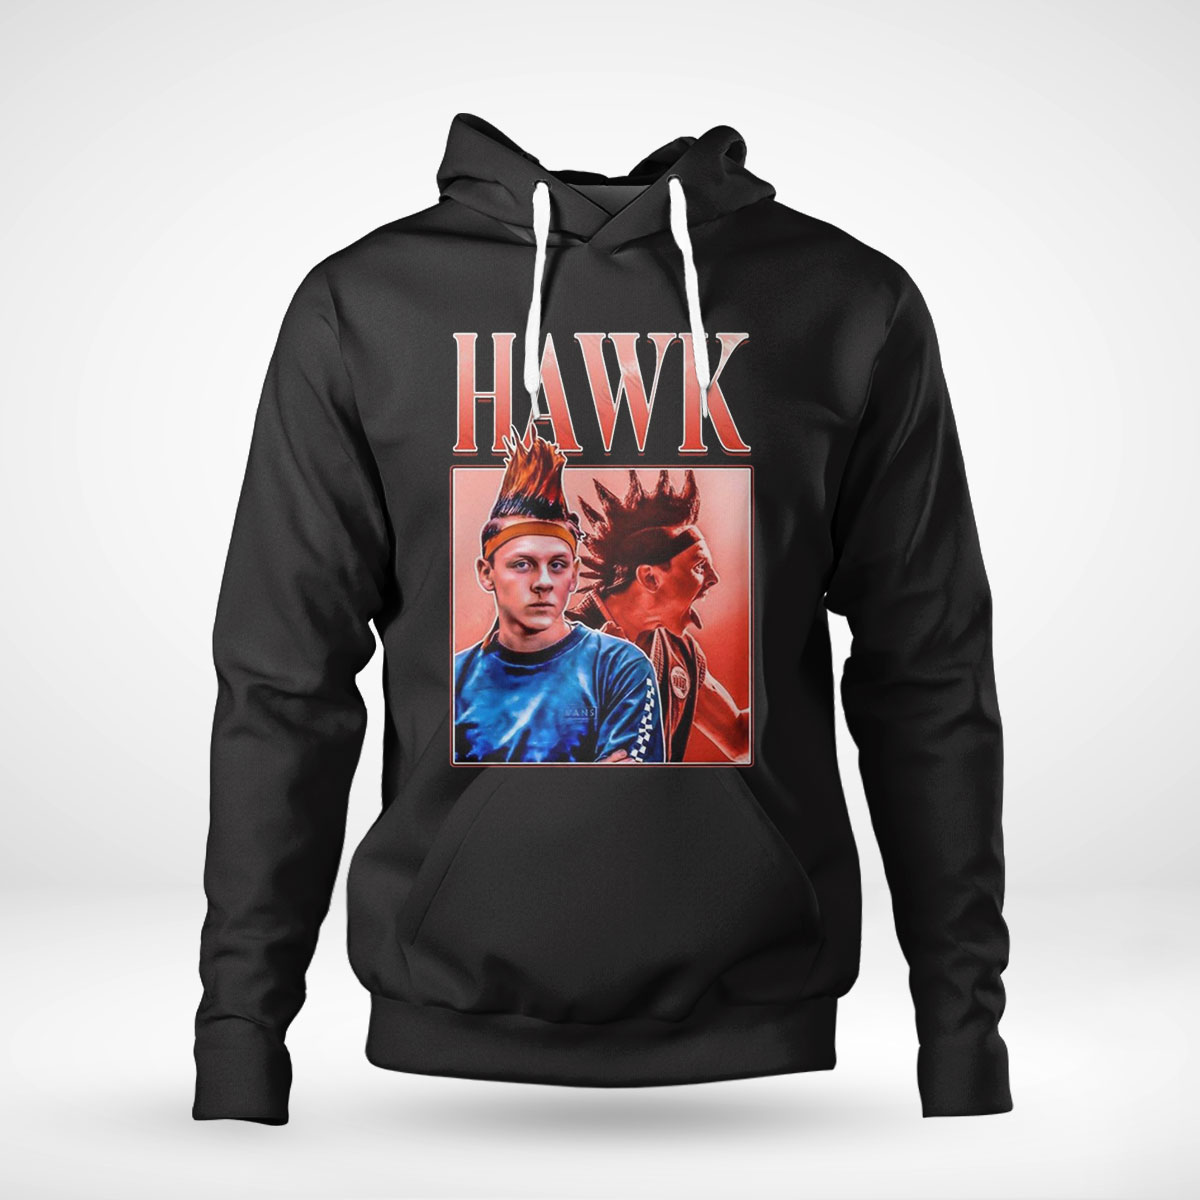 Hawk Cobra Kai T-shirt 90s Graphic Tee Hoodie, Long Sleeve, Tank Top